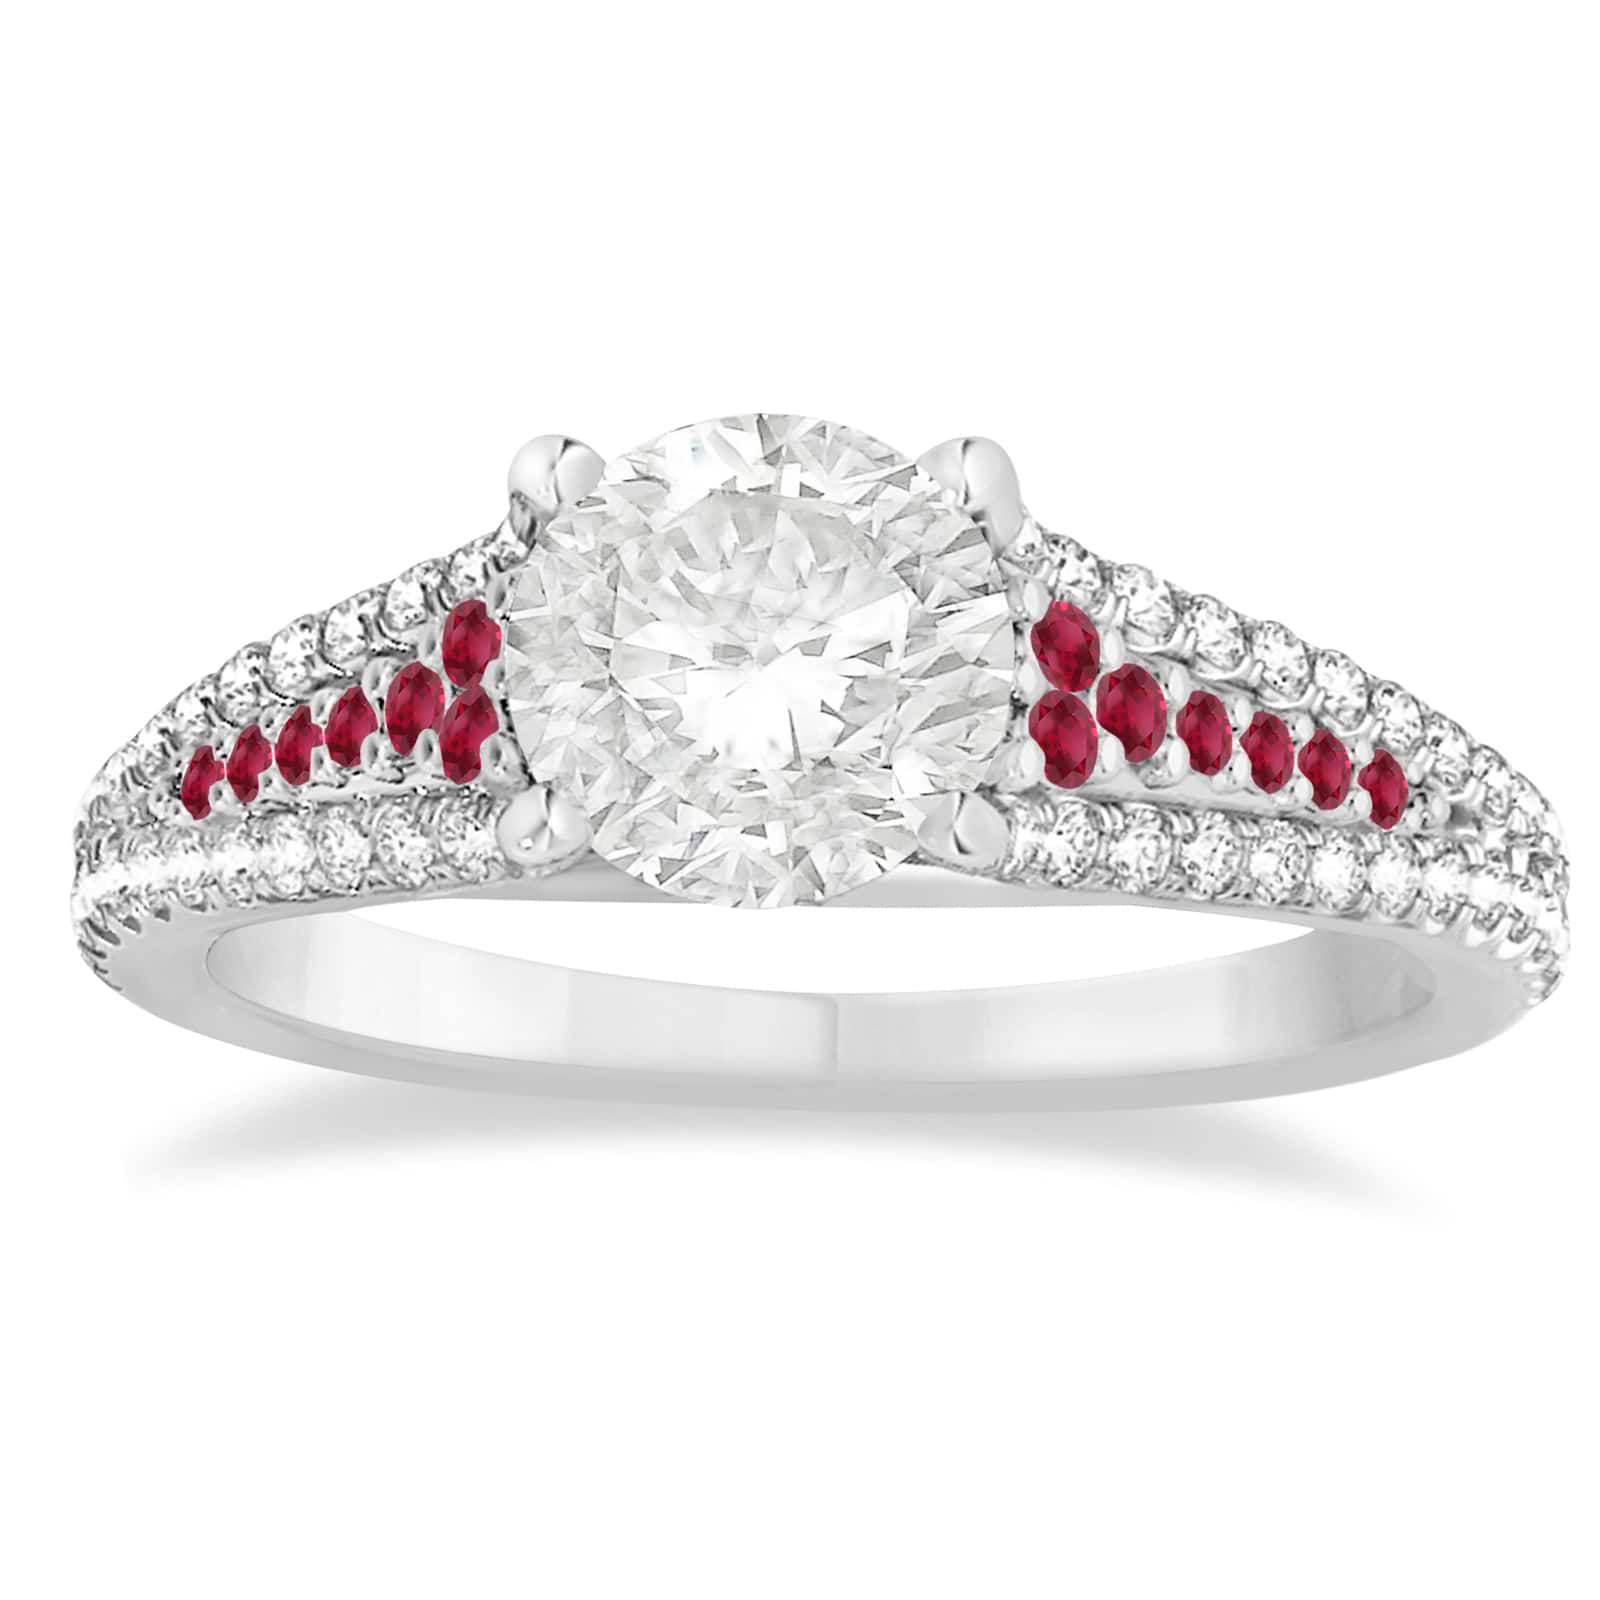 Ruby & Diamond Engagement Ring 14k White Gold (0.33ct)